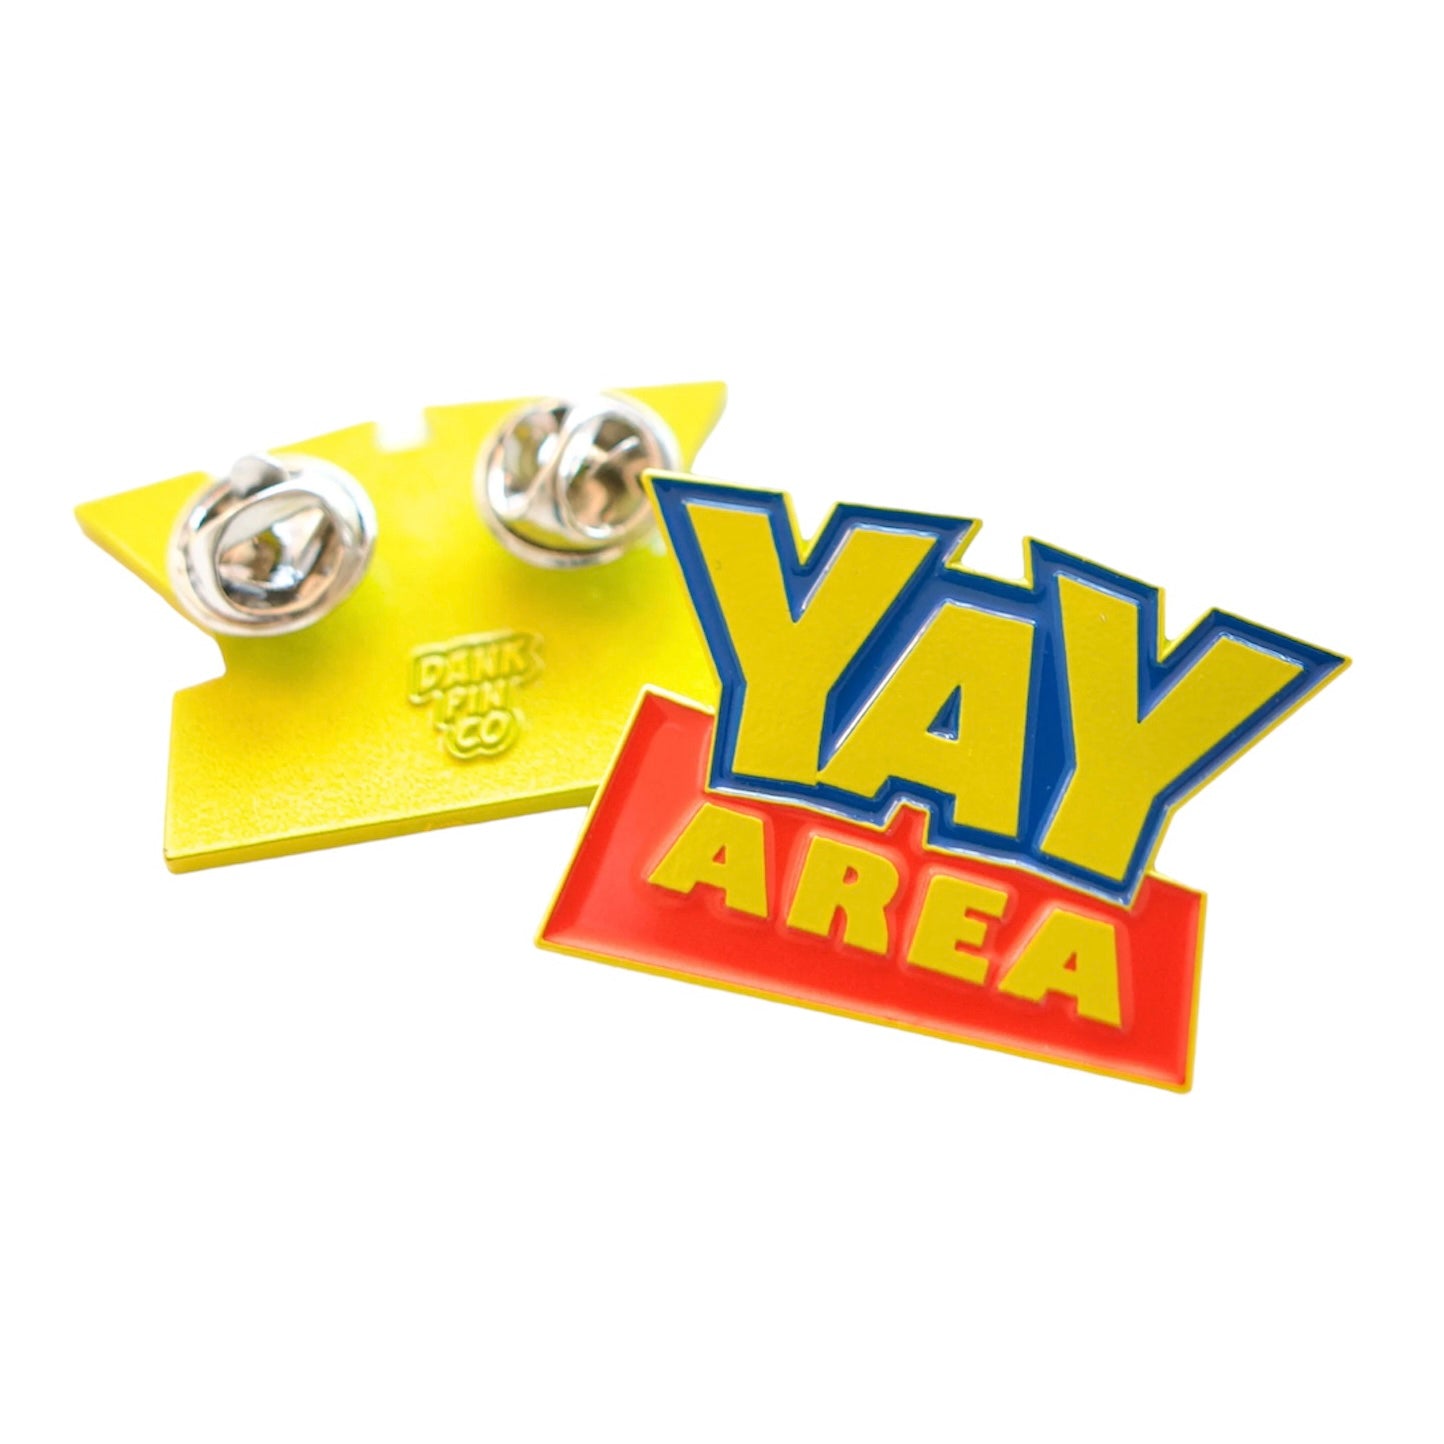 “Toy Story Yay Area” Enamel Pin